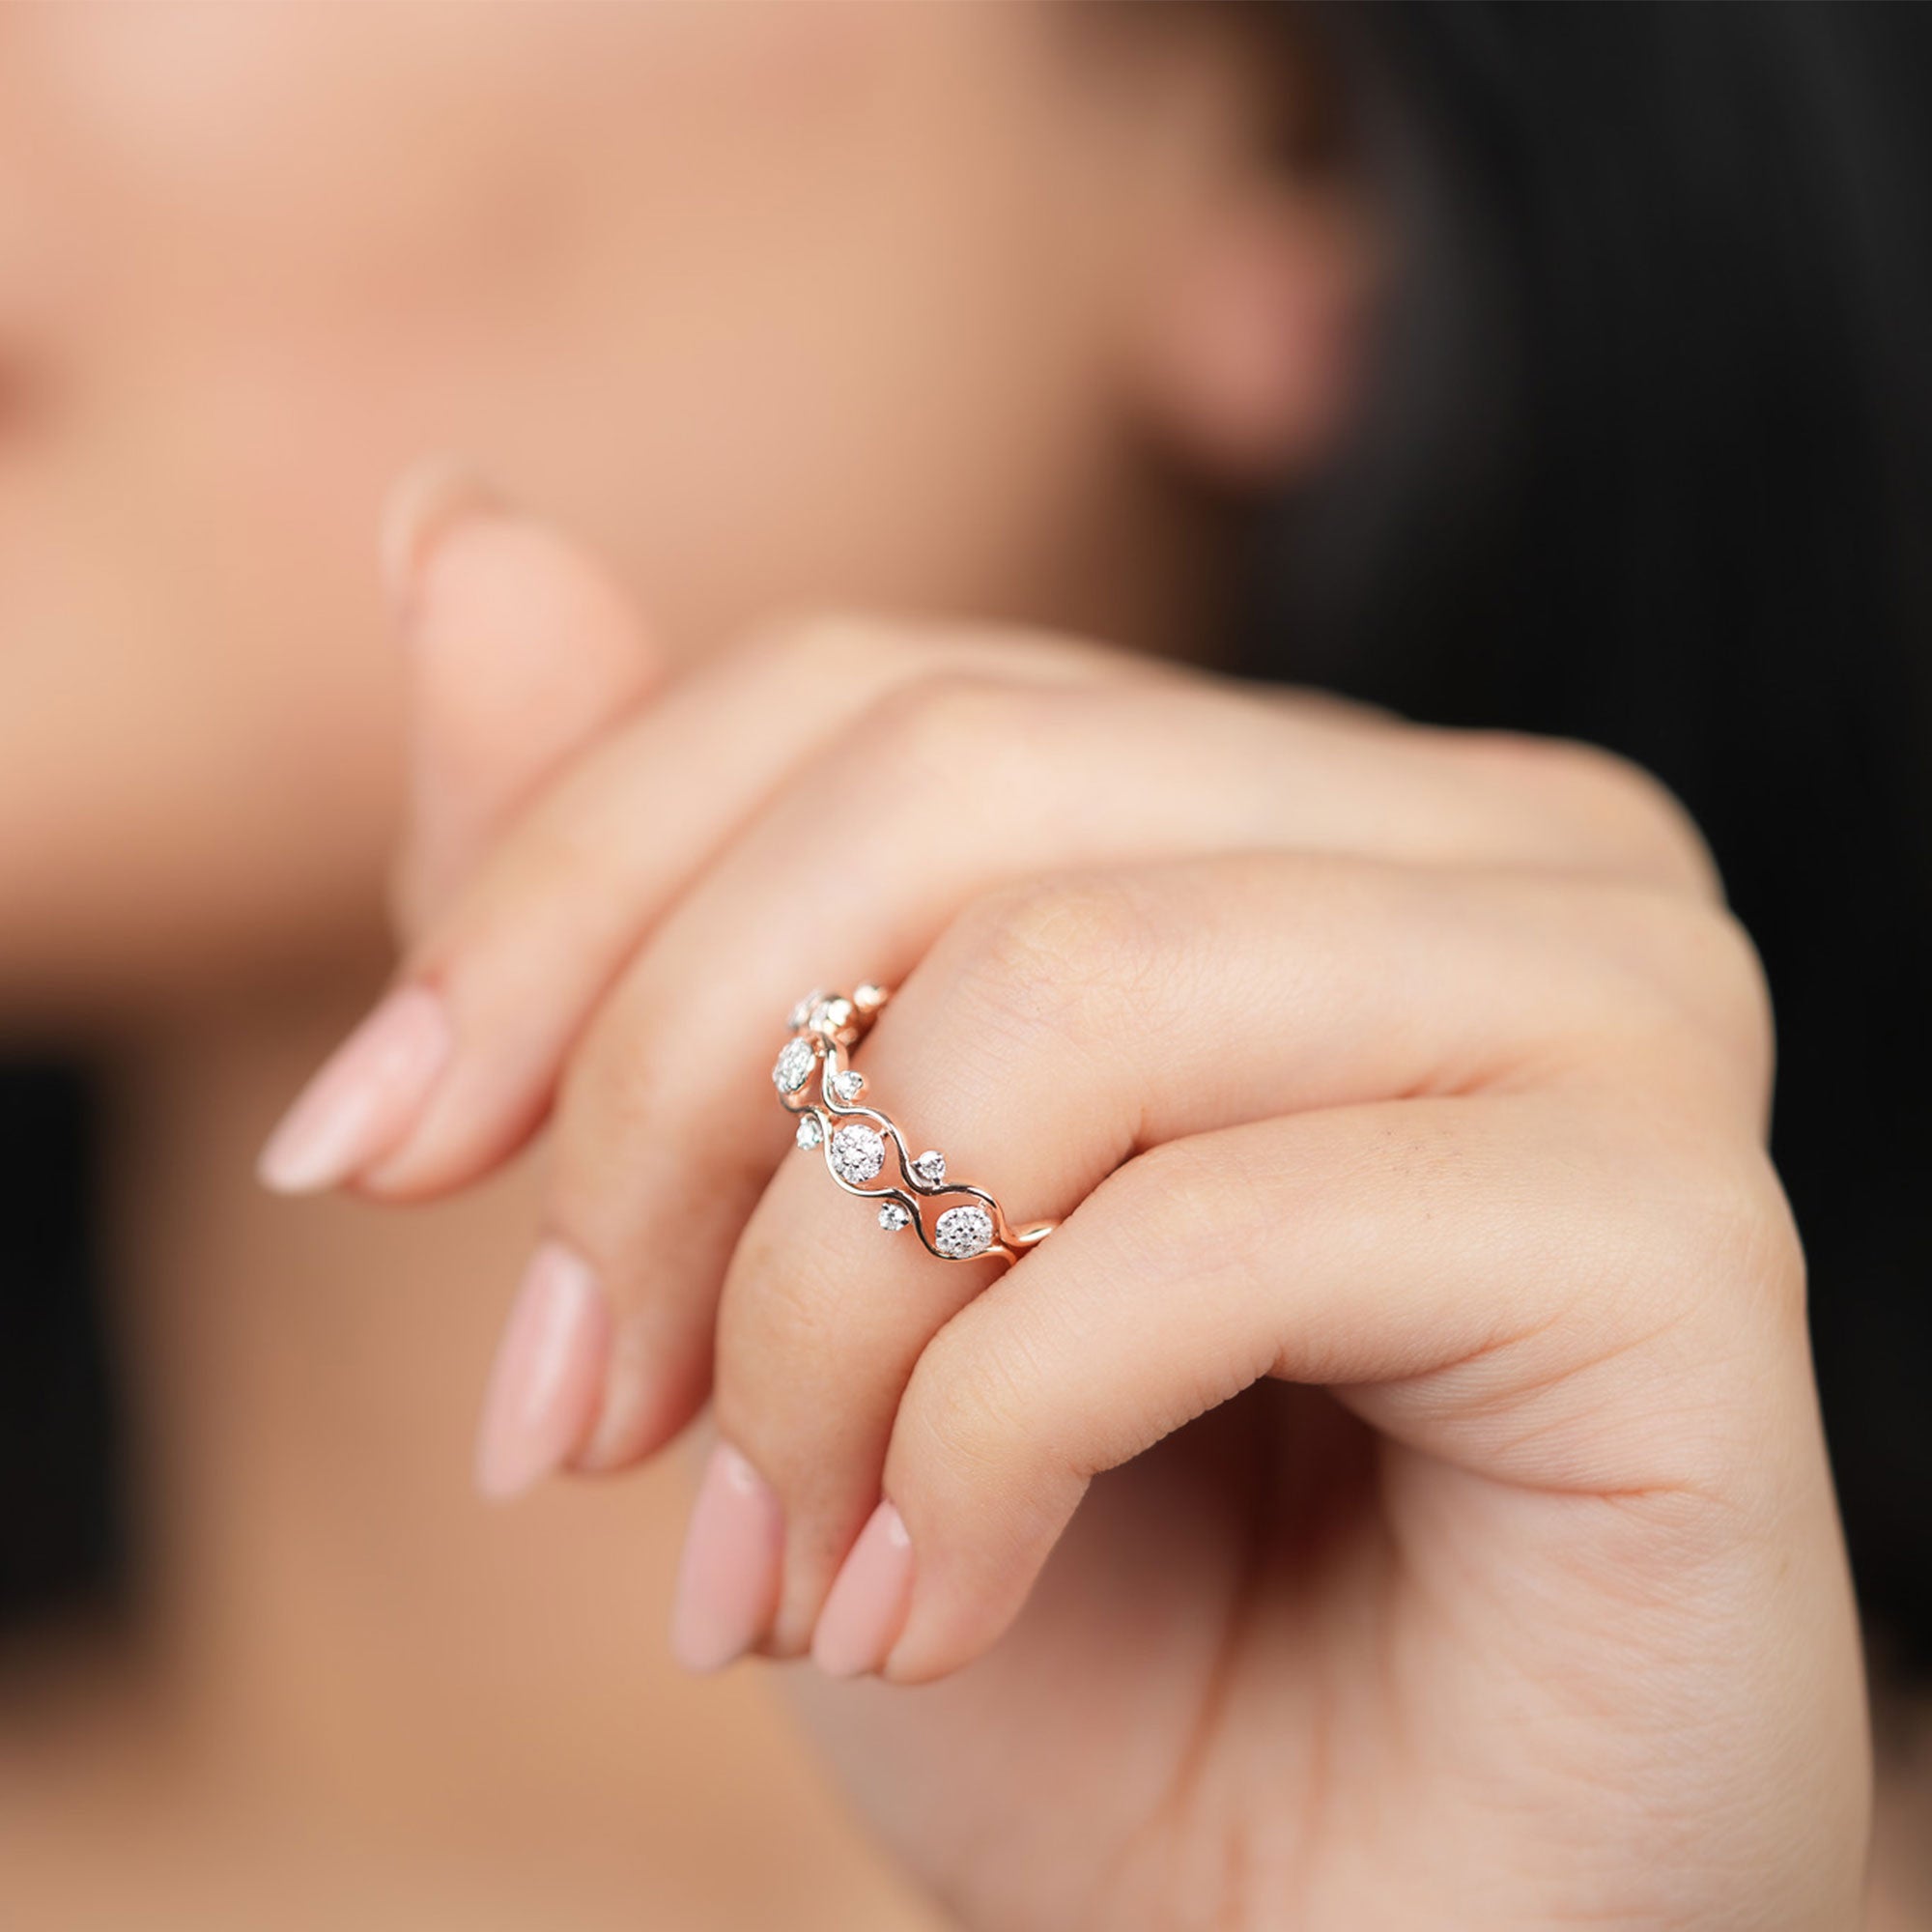 0.27 Carat Diamond Ring in 14Kt Gold For Women - Blu Diamonds